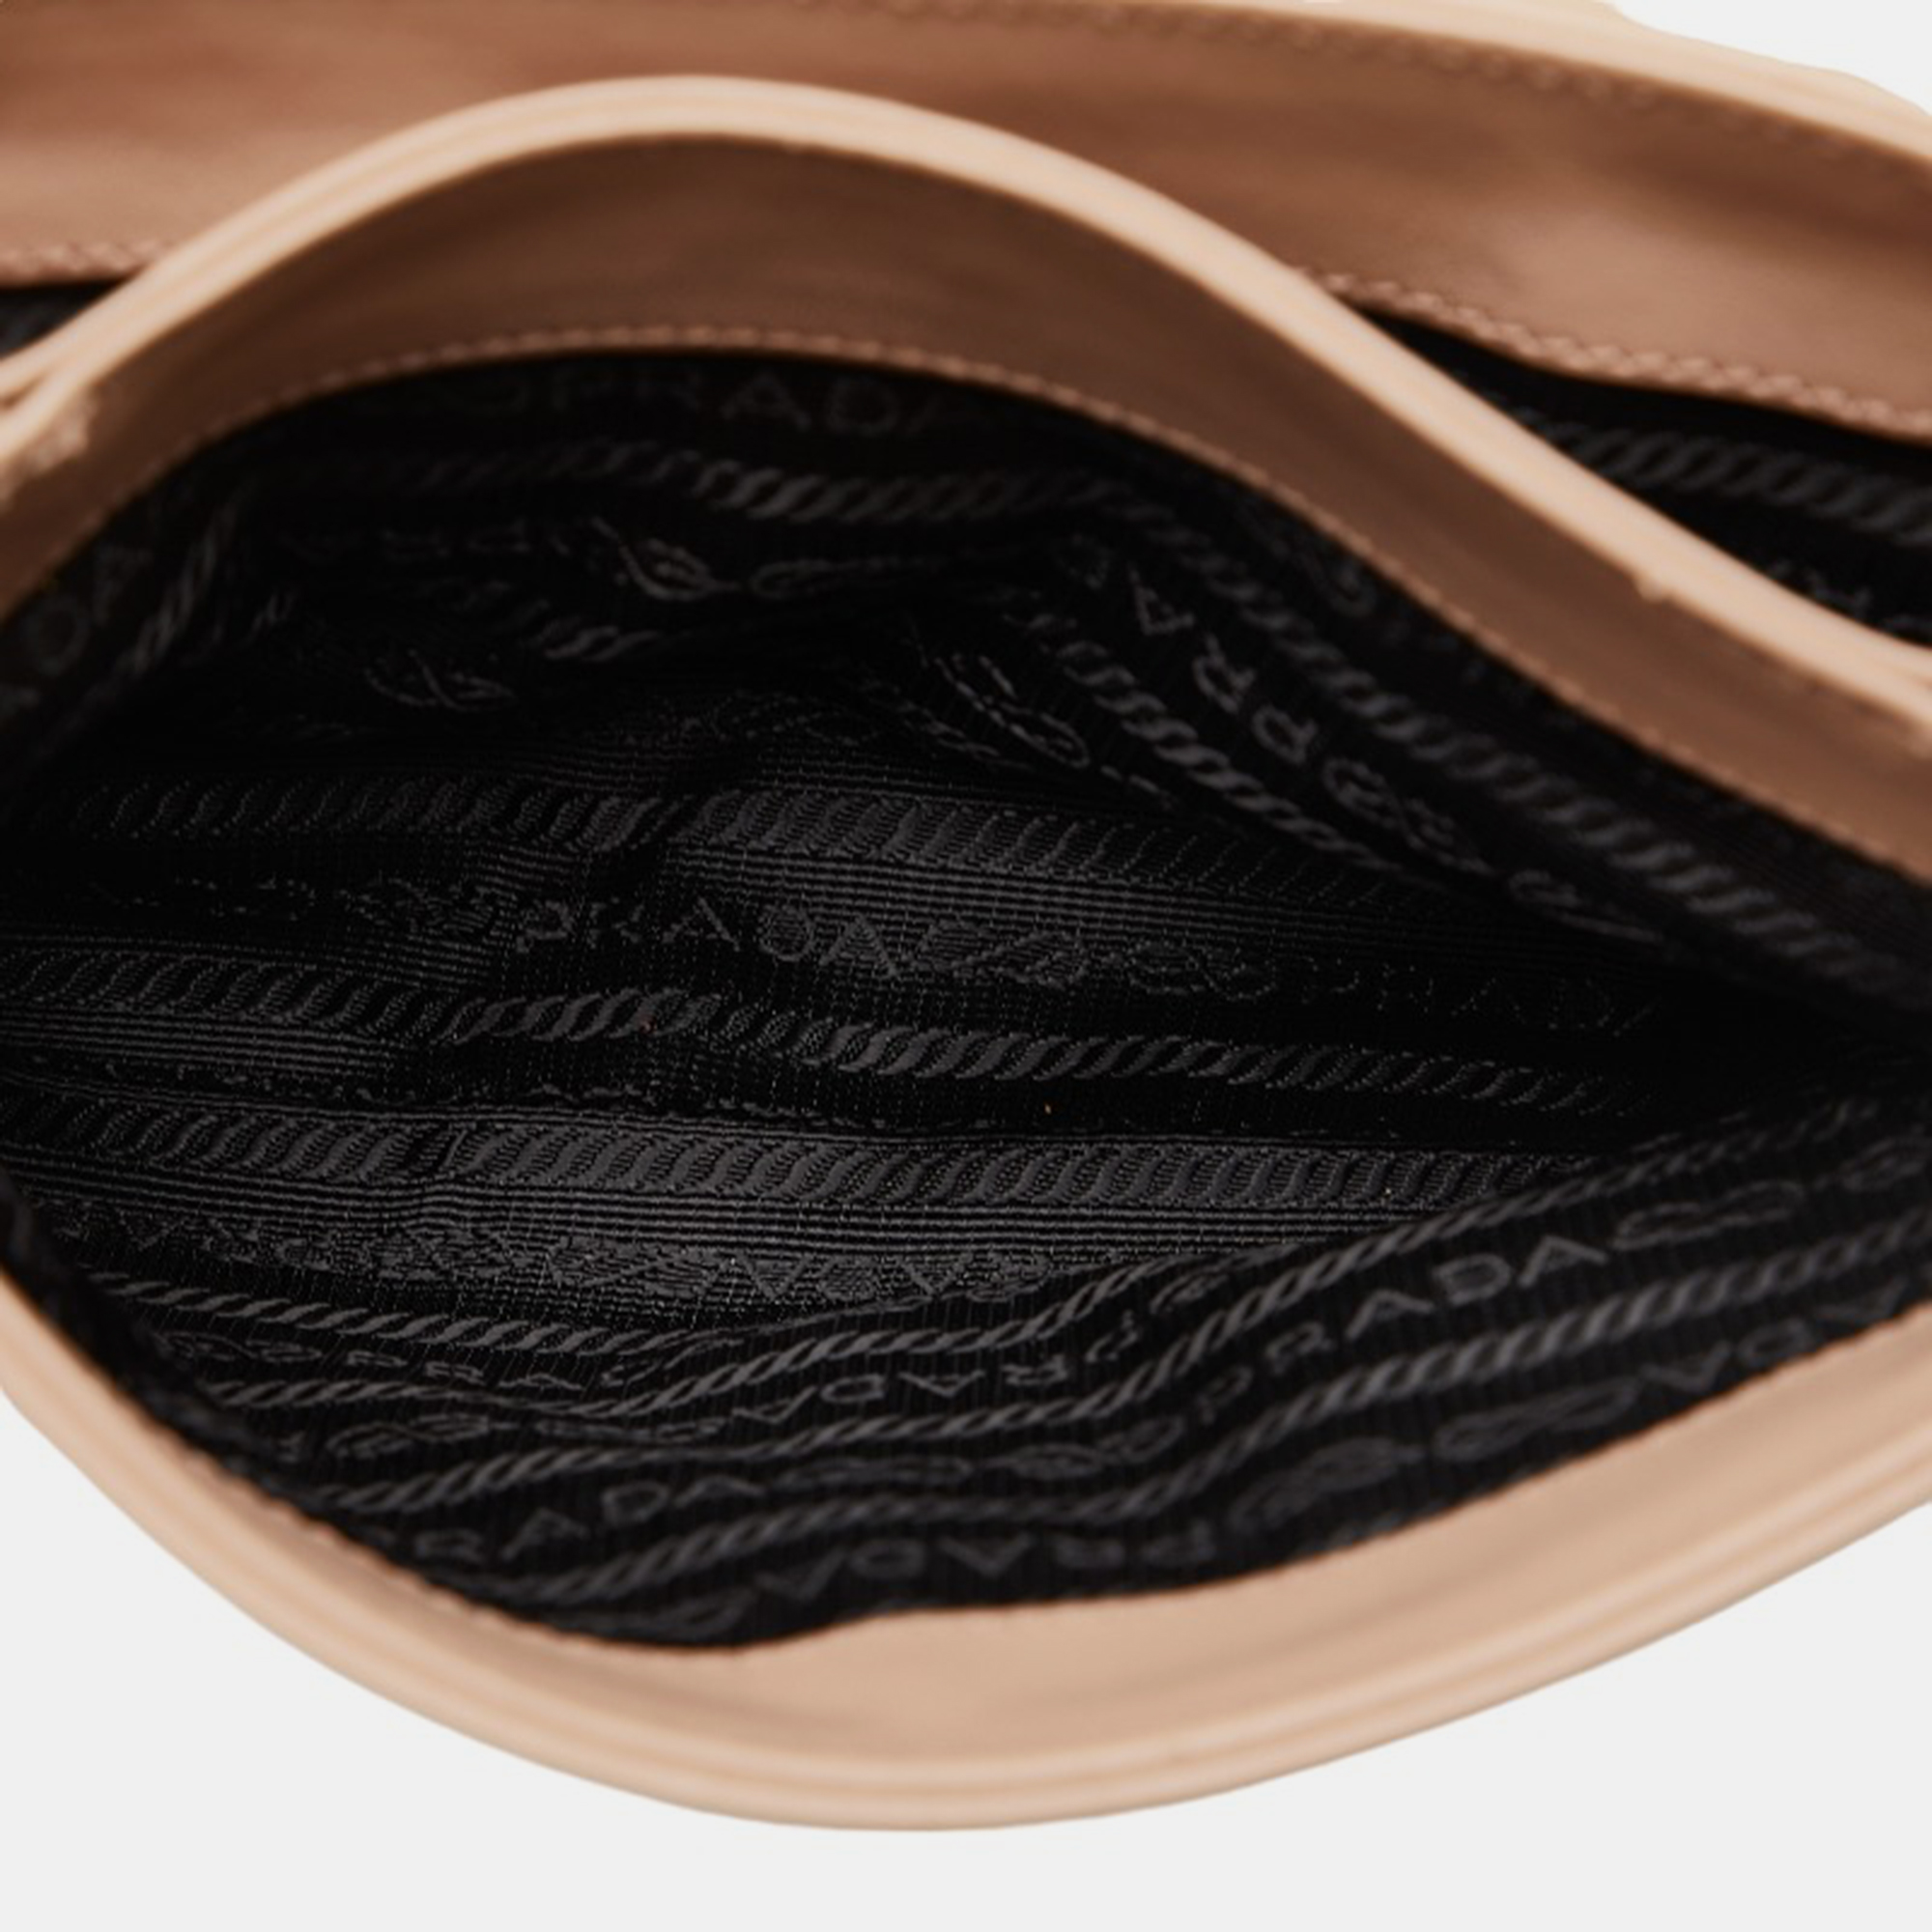 Prada Brown Saffiano Leather Chain Shoulder Bag